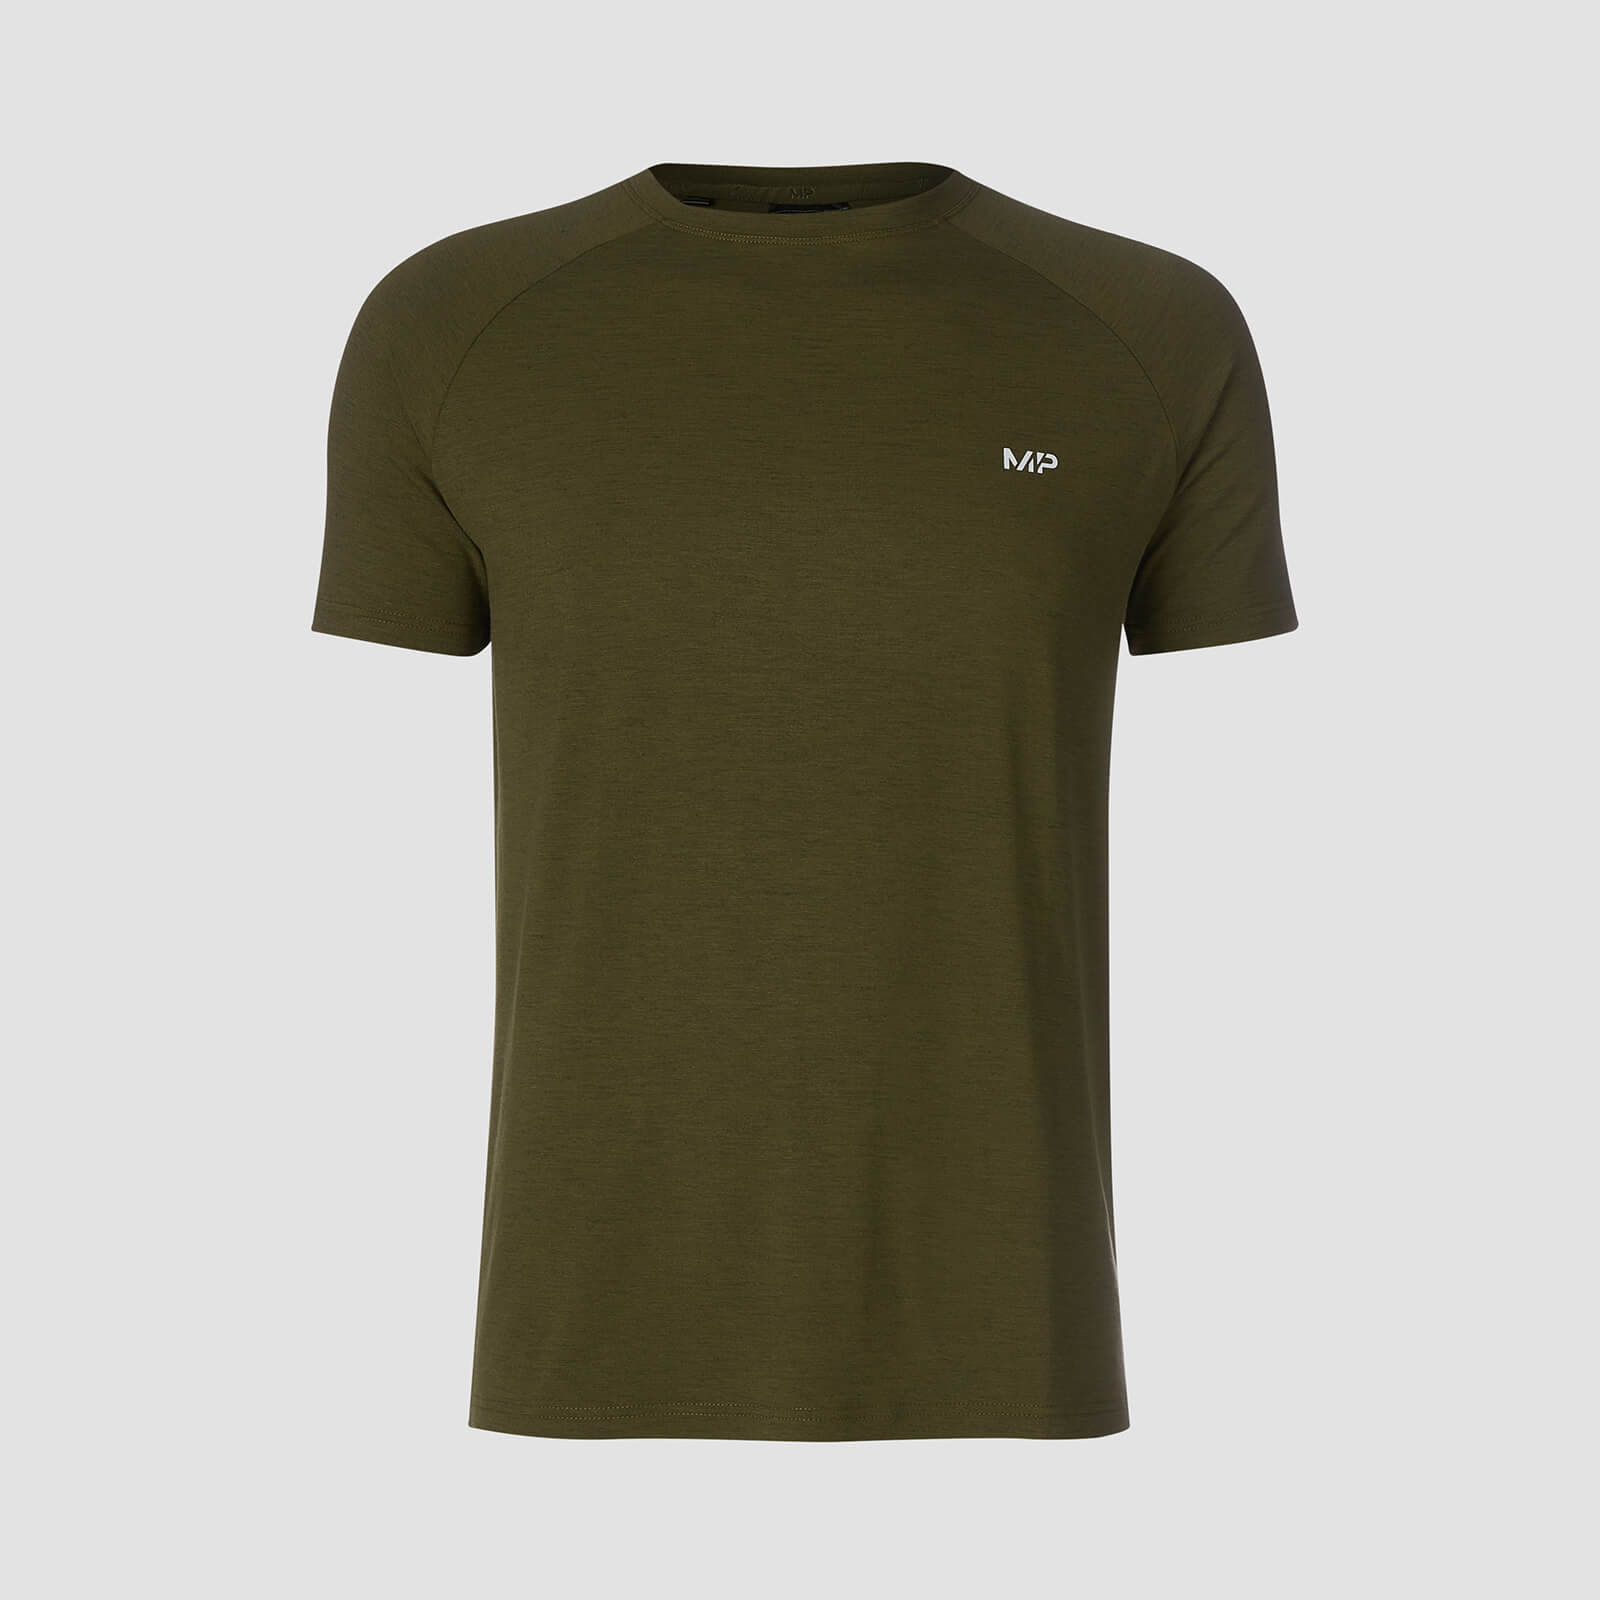 Myprotein MP Performance Short Sleeve T-Shirt - Army Green/Sort - XS